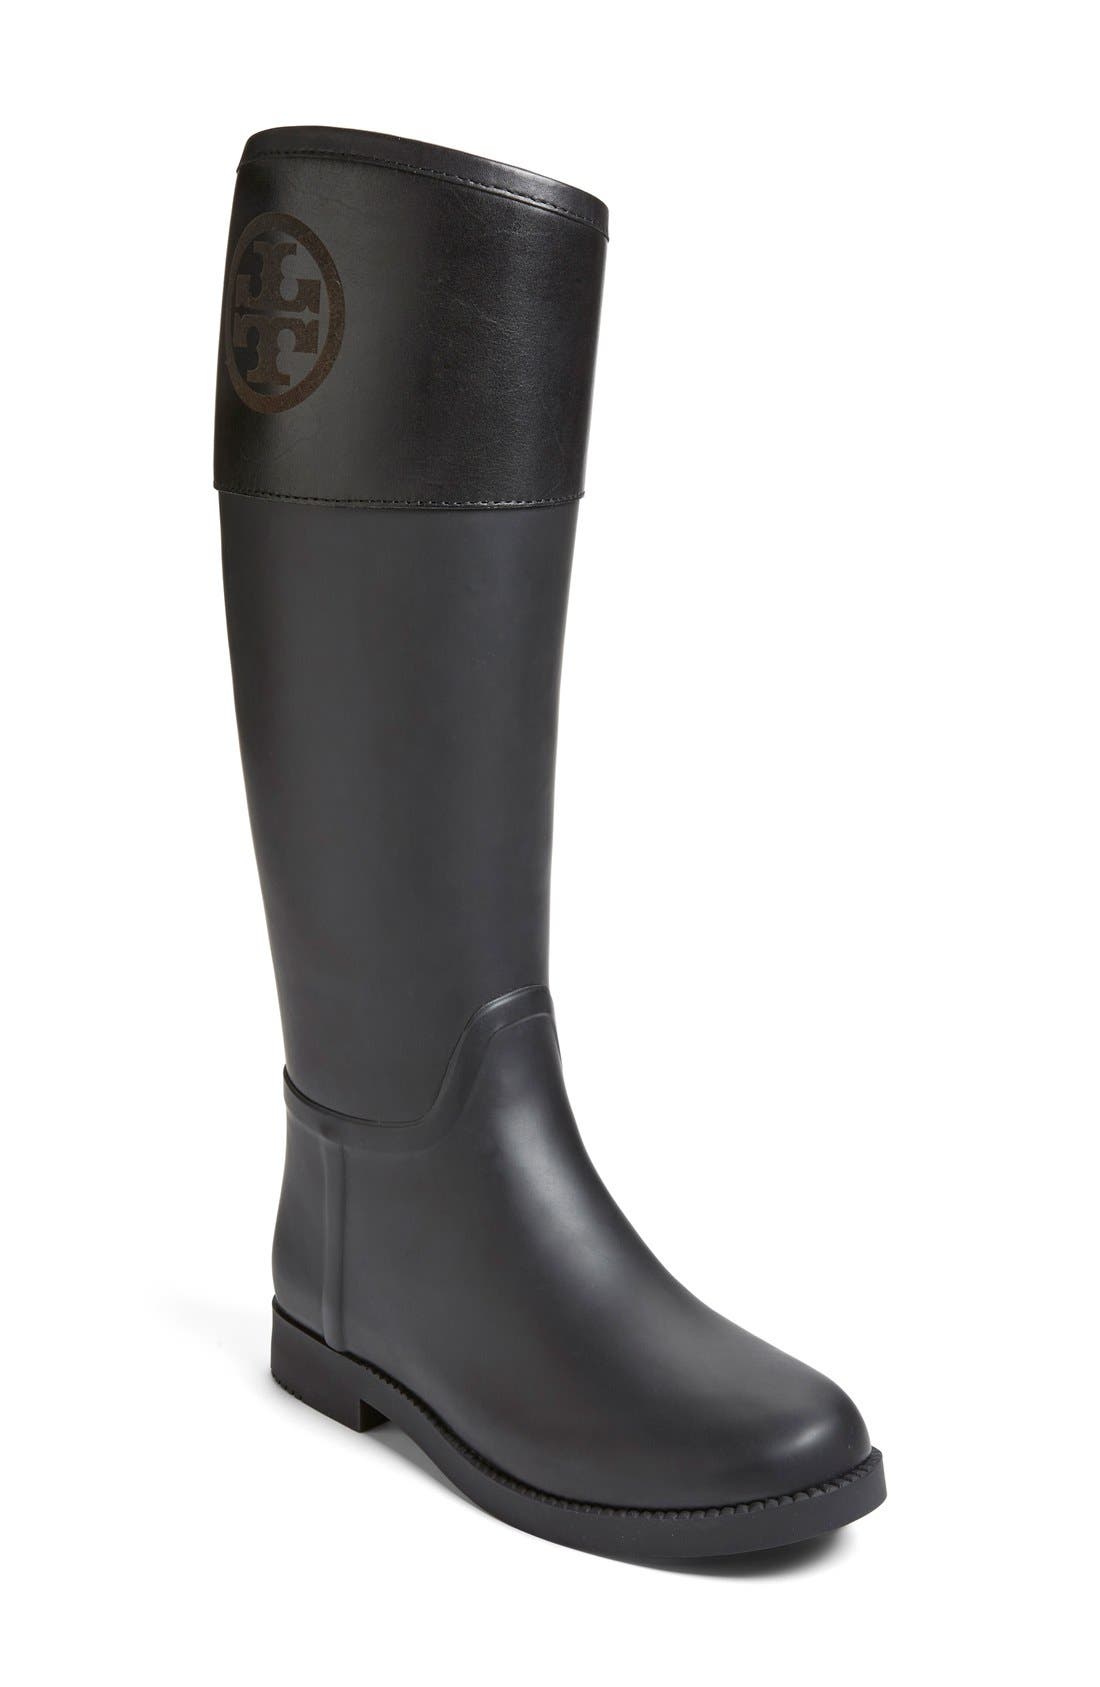 tory burch diana rain boots